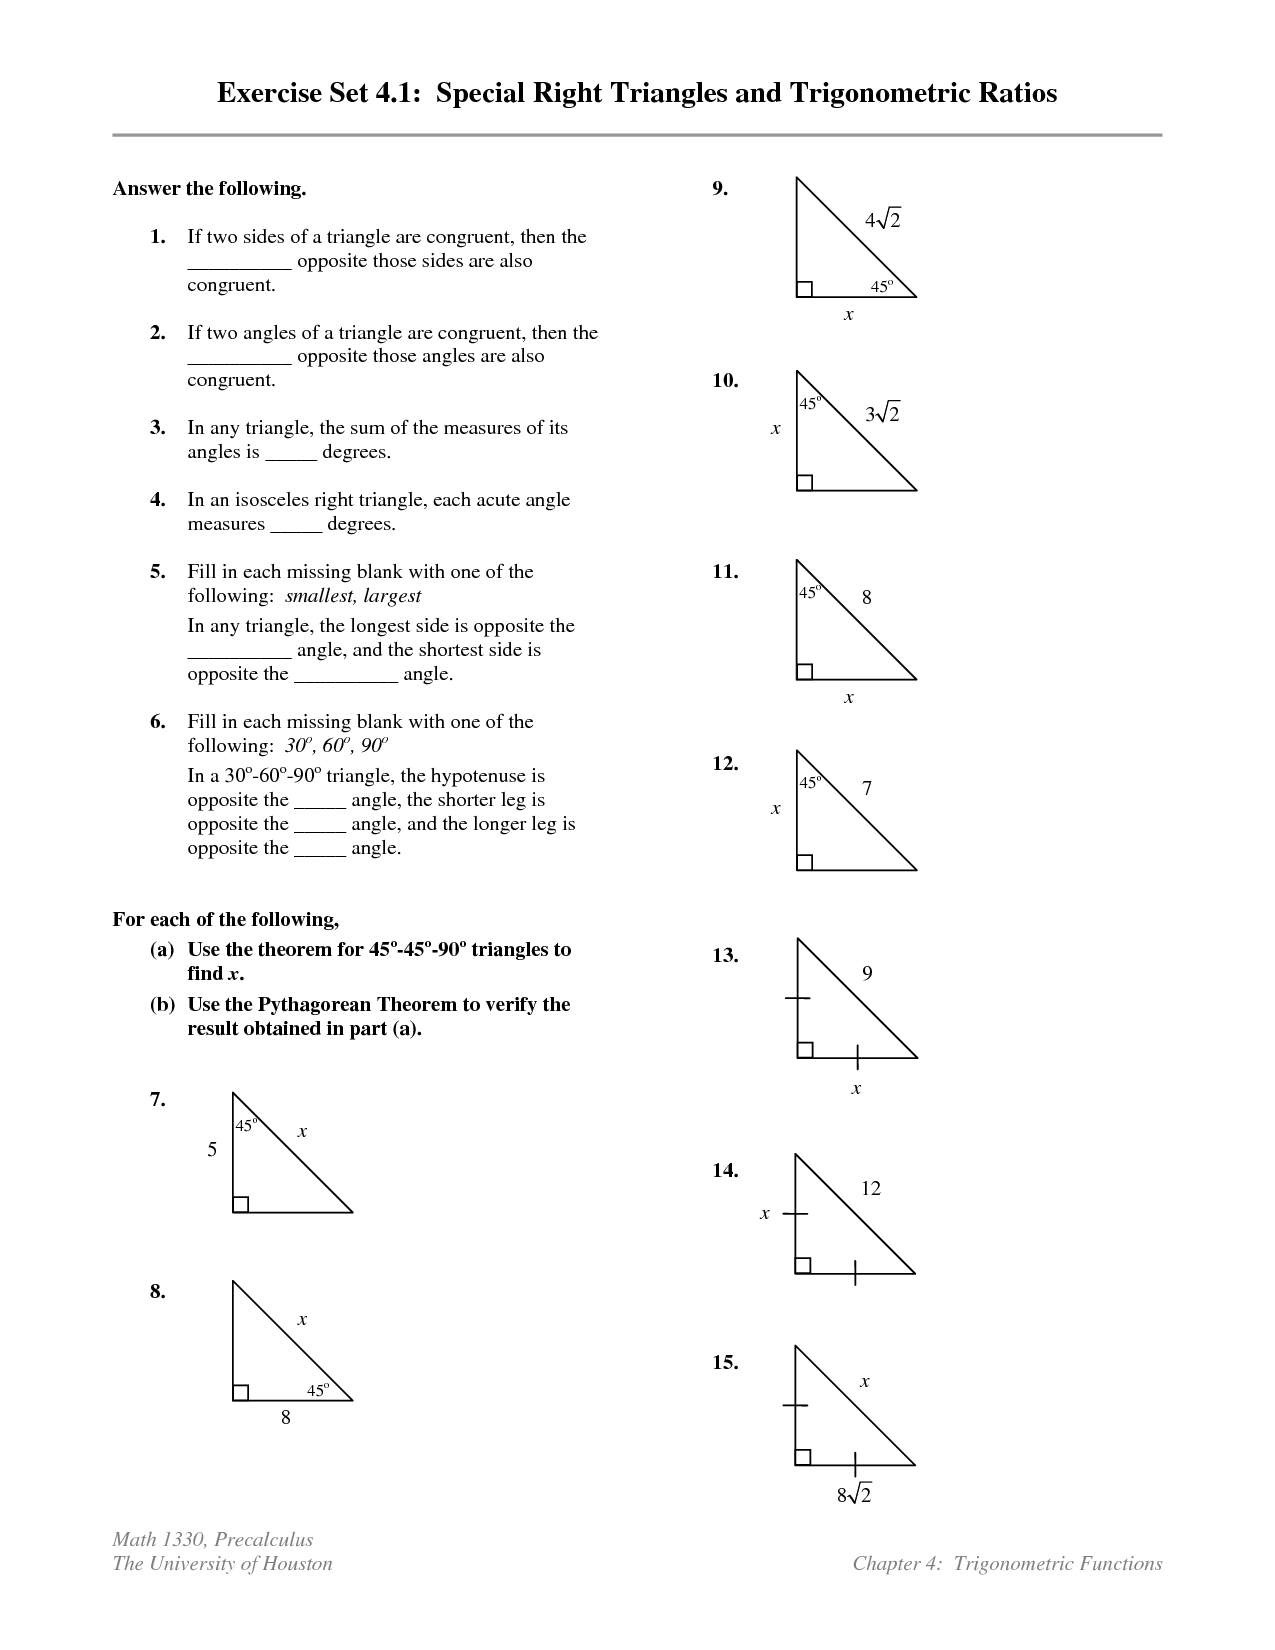 Right Triangle Trigonometry Worksheet Image